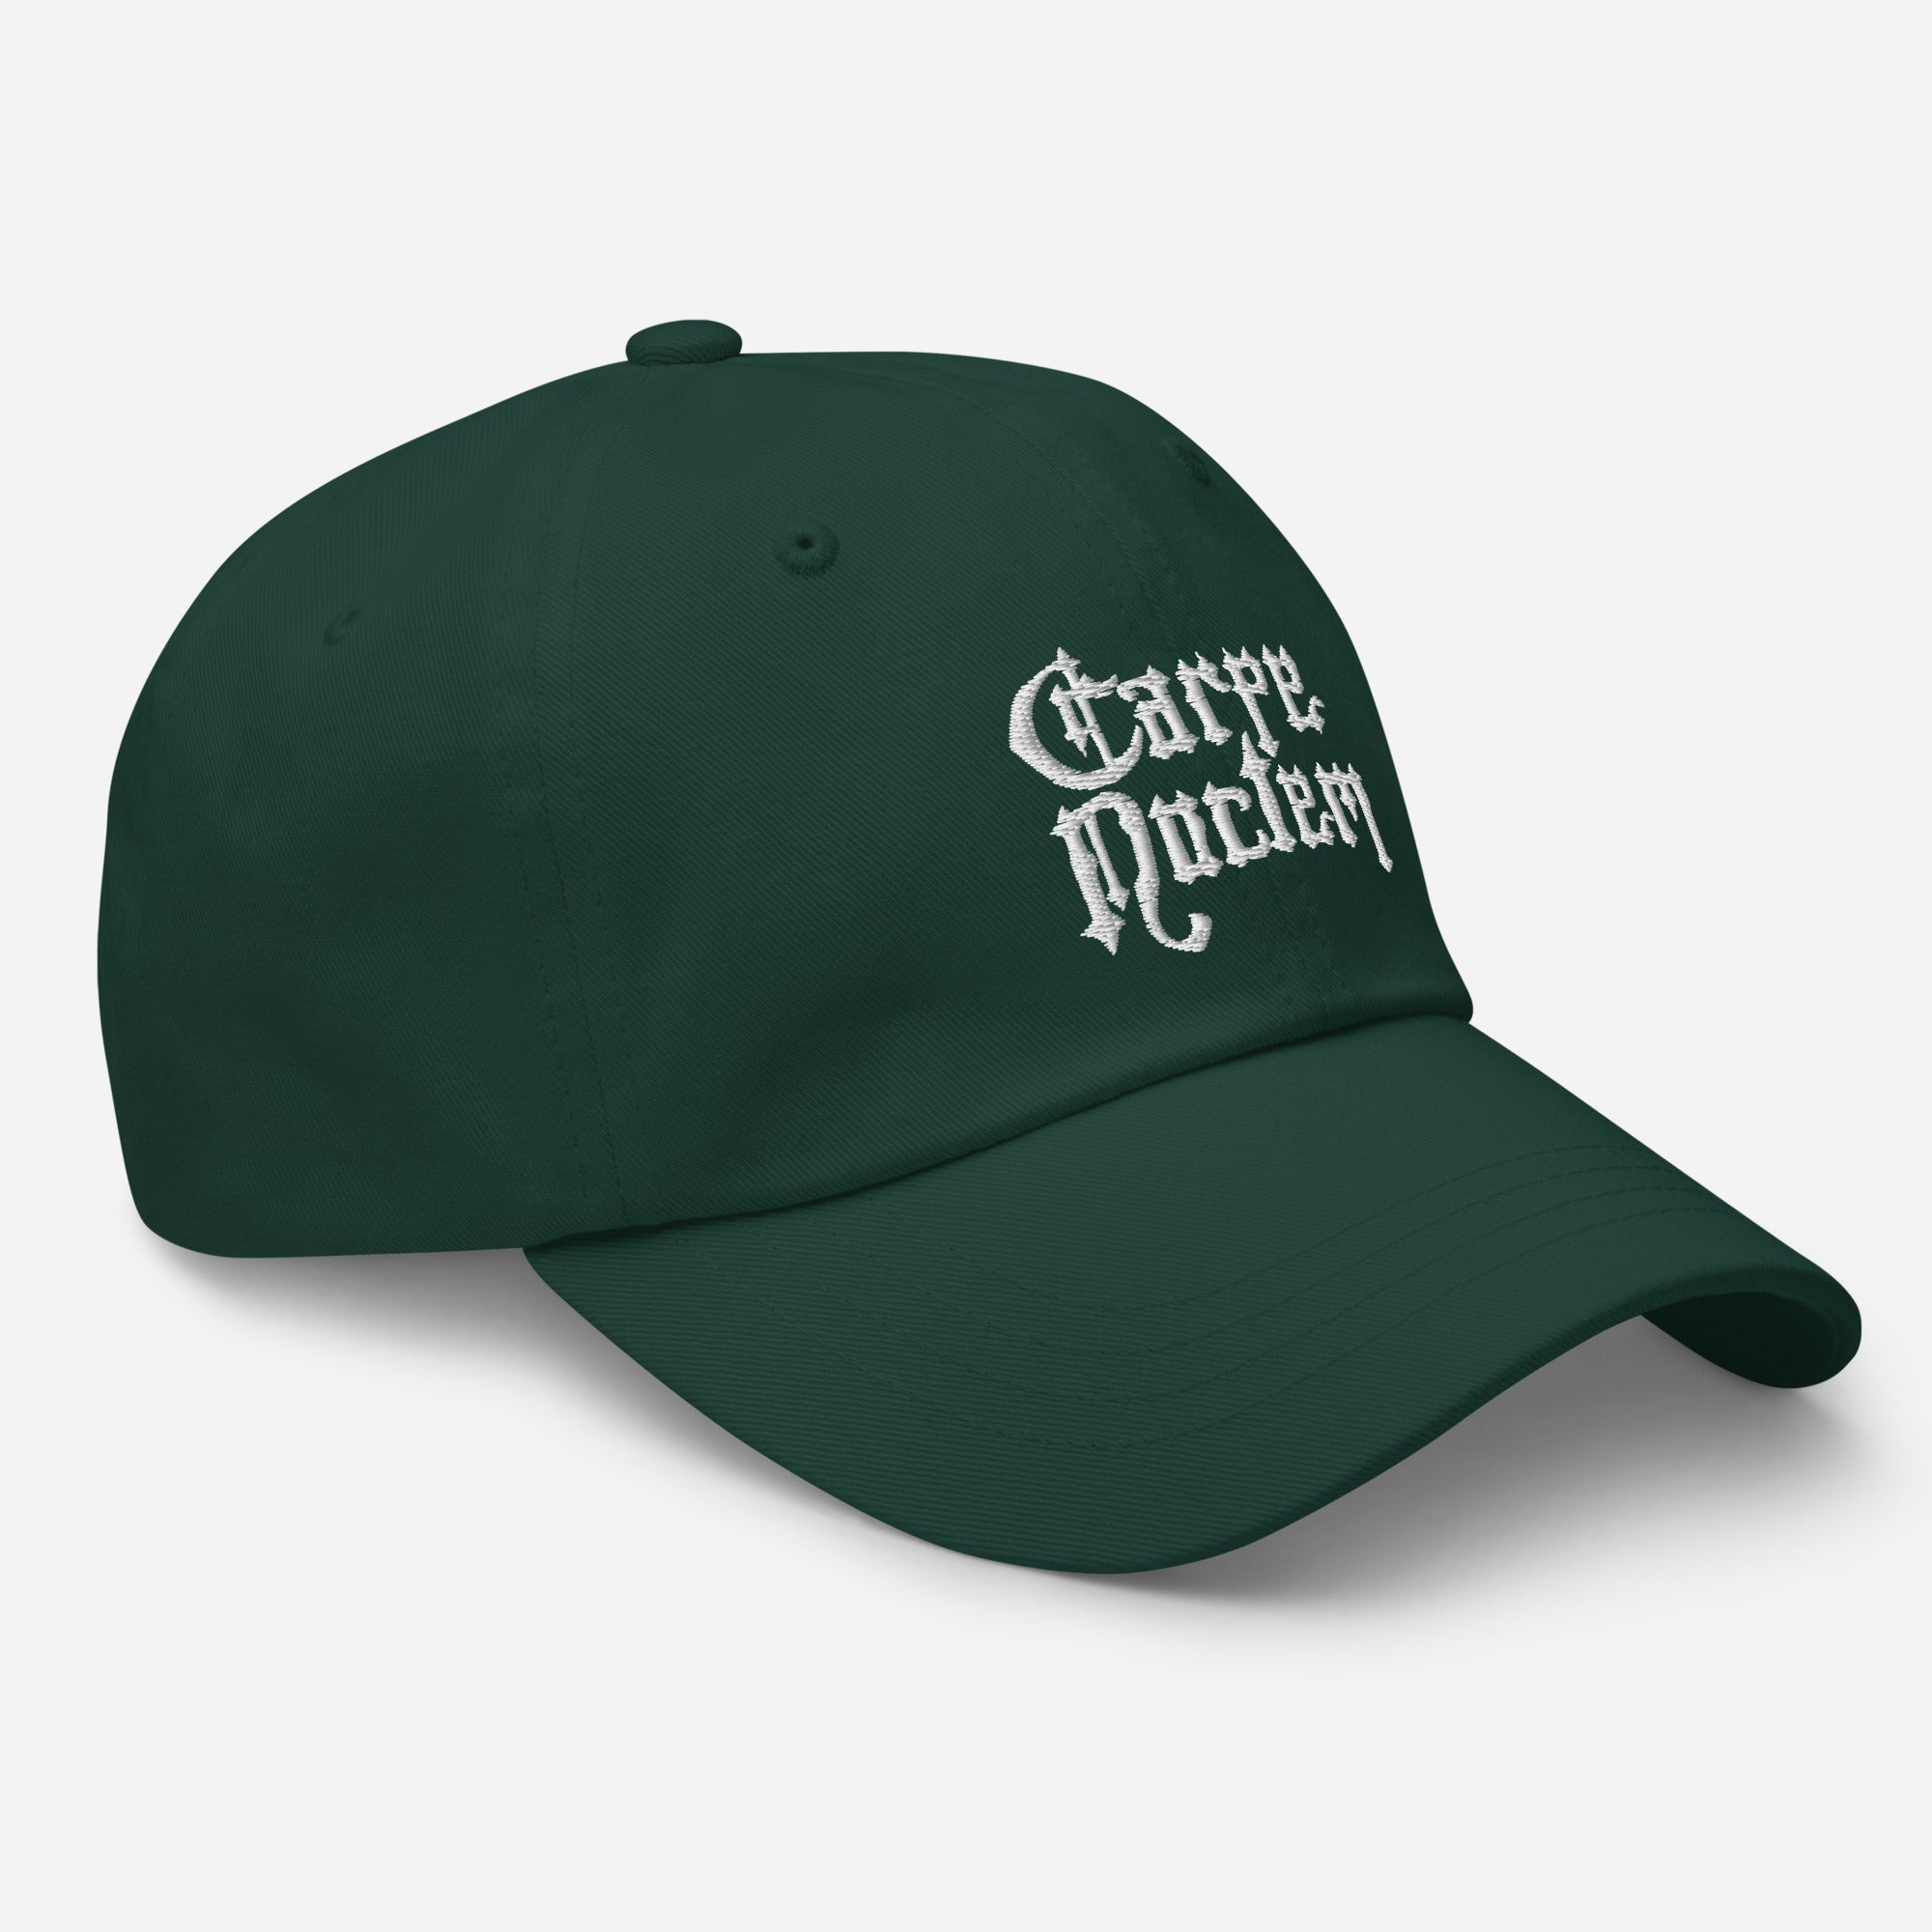 Carpe Noctem Seize The Night Vampire Embroidered Baseball Cap Dad hat